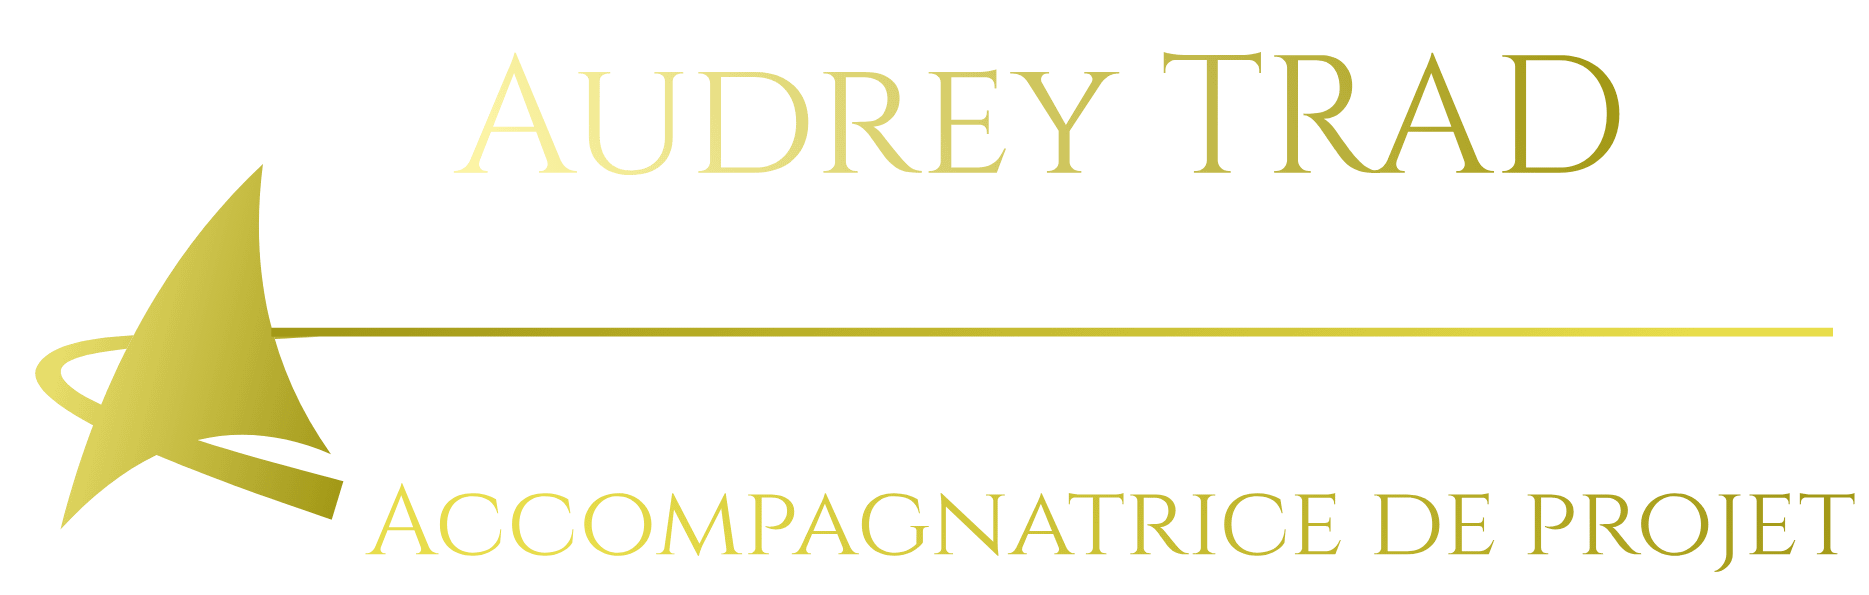 Audrey Trad